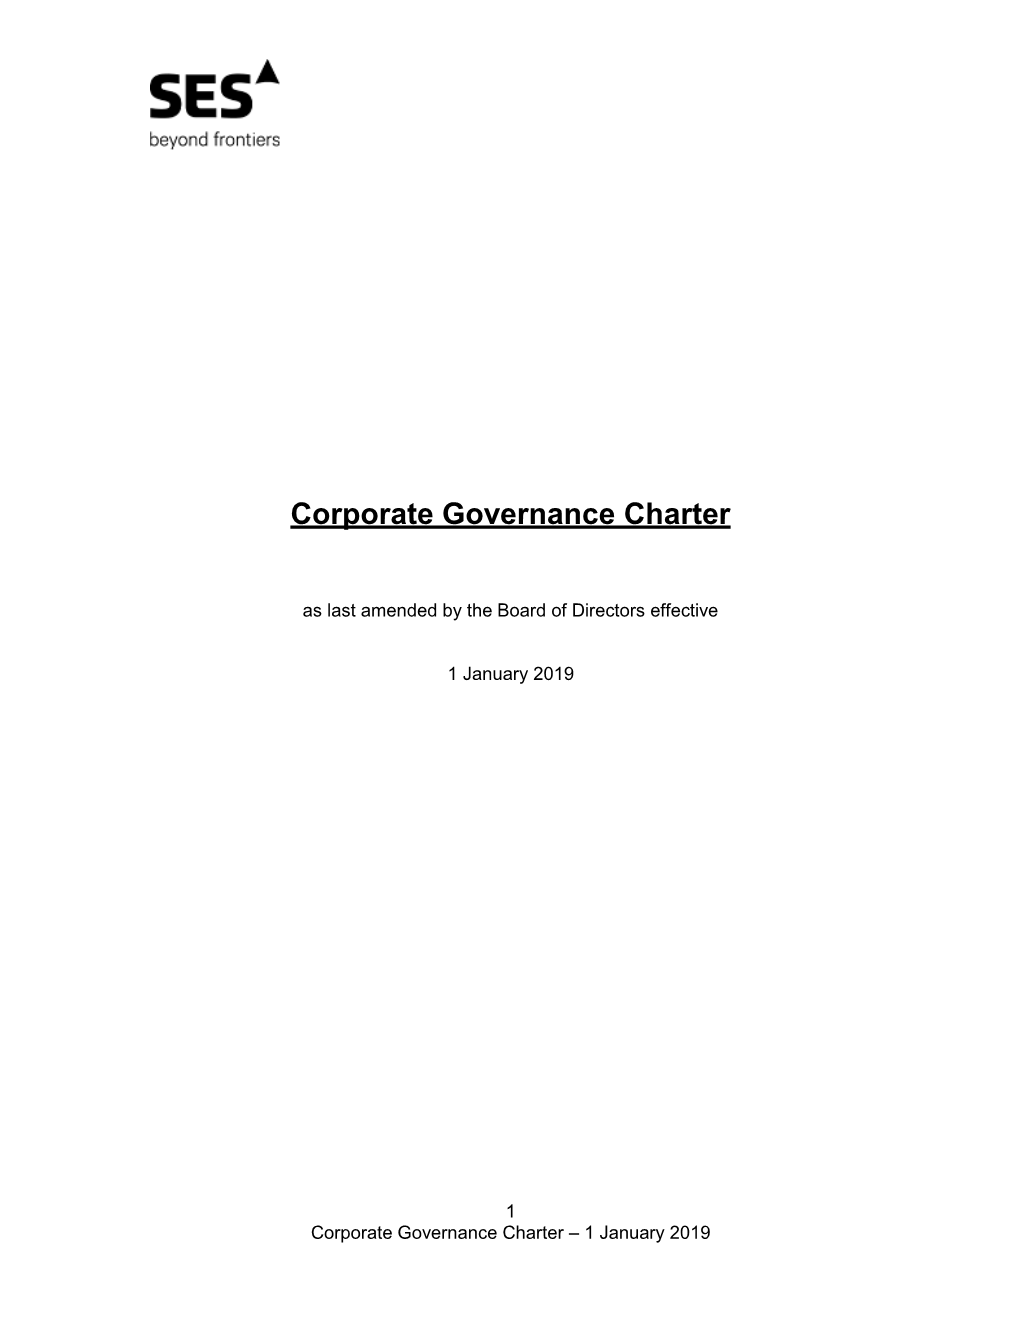 4. Corporate Governance Charter